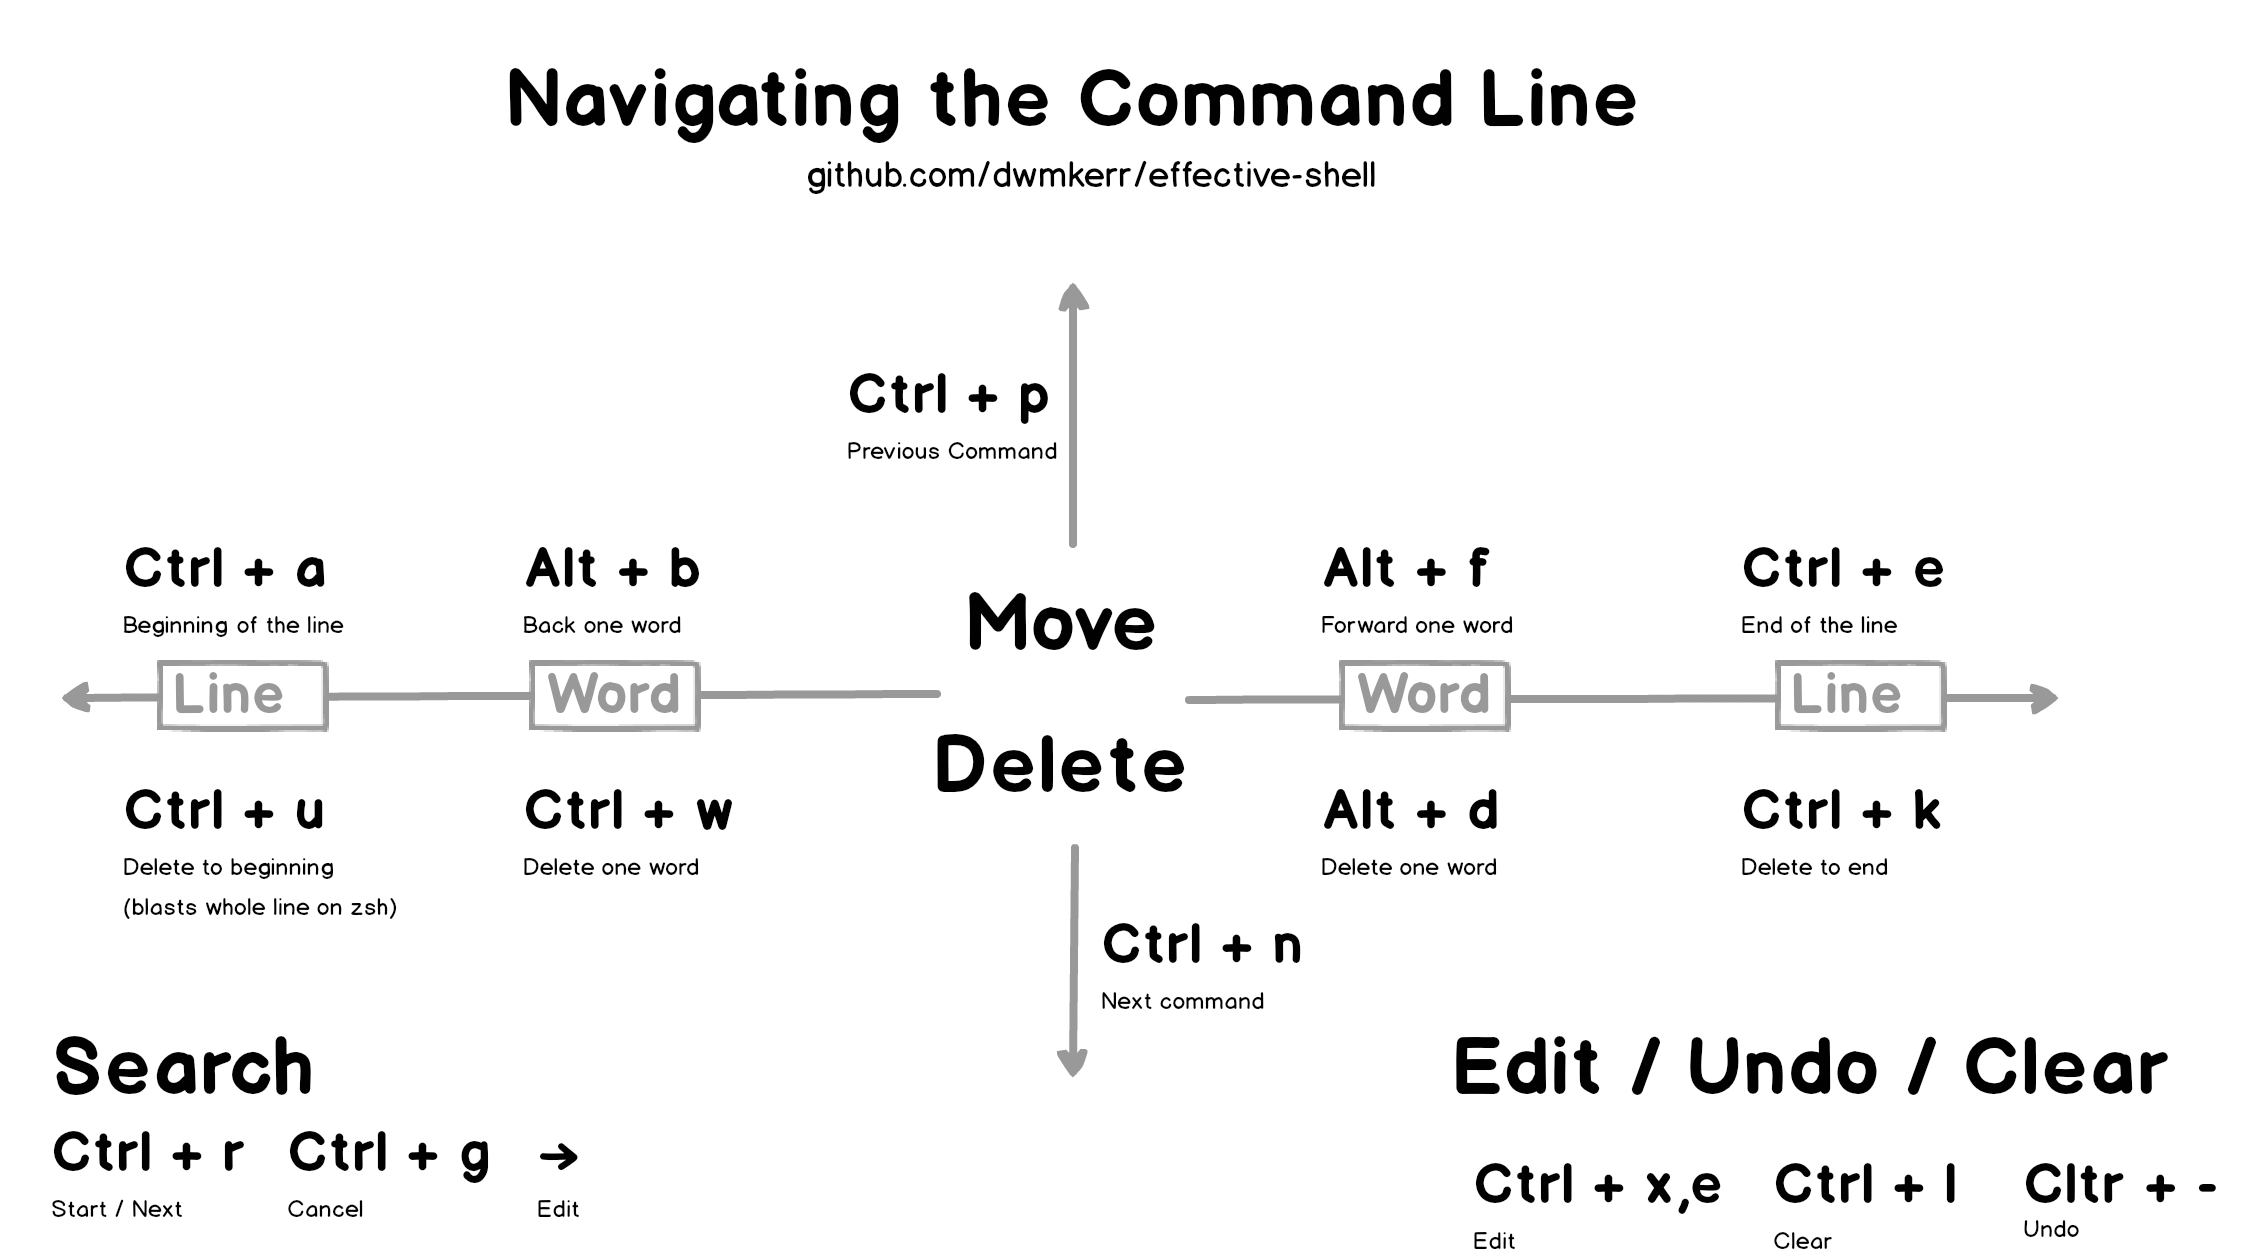 command line